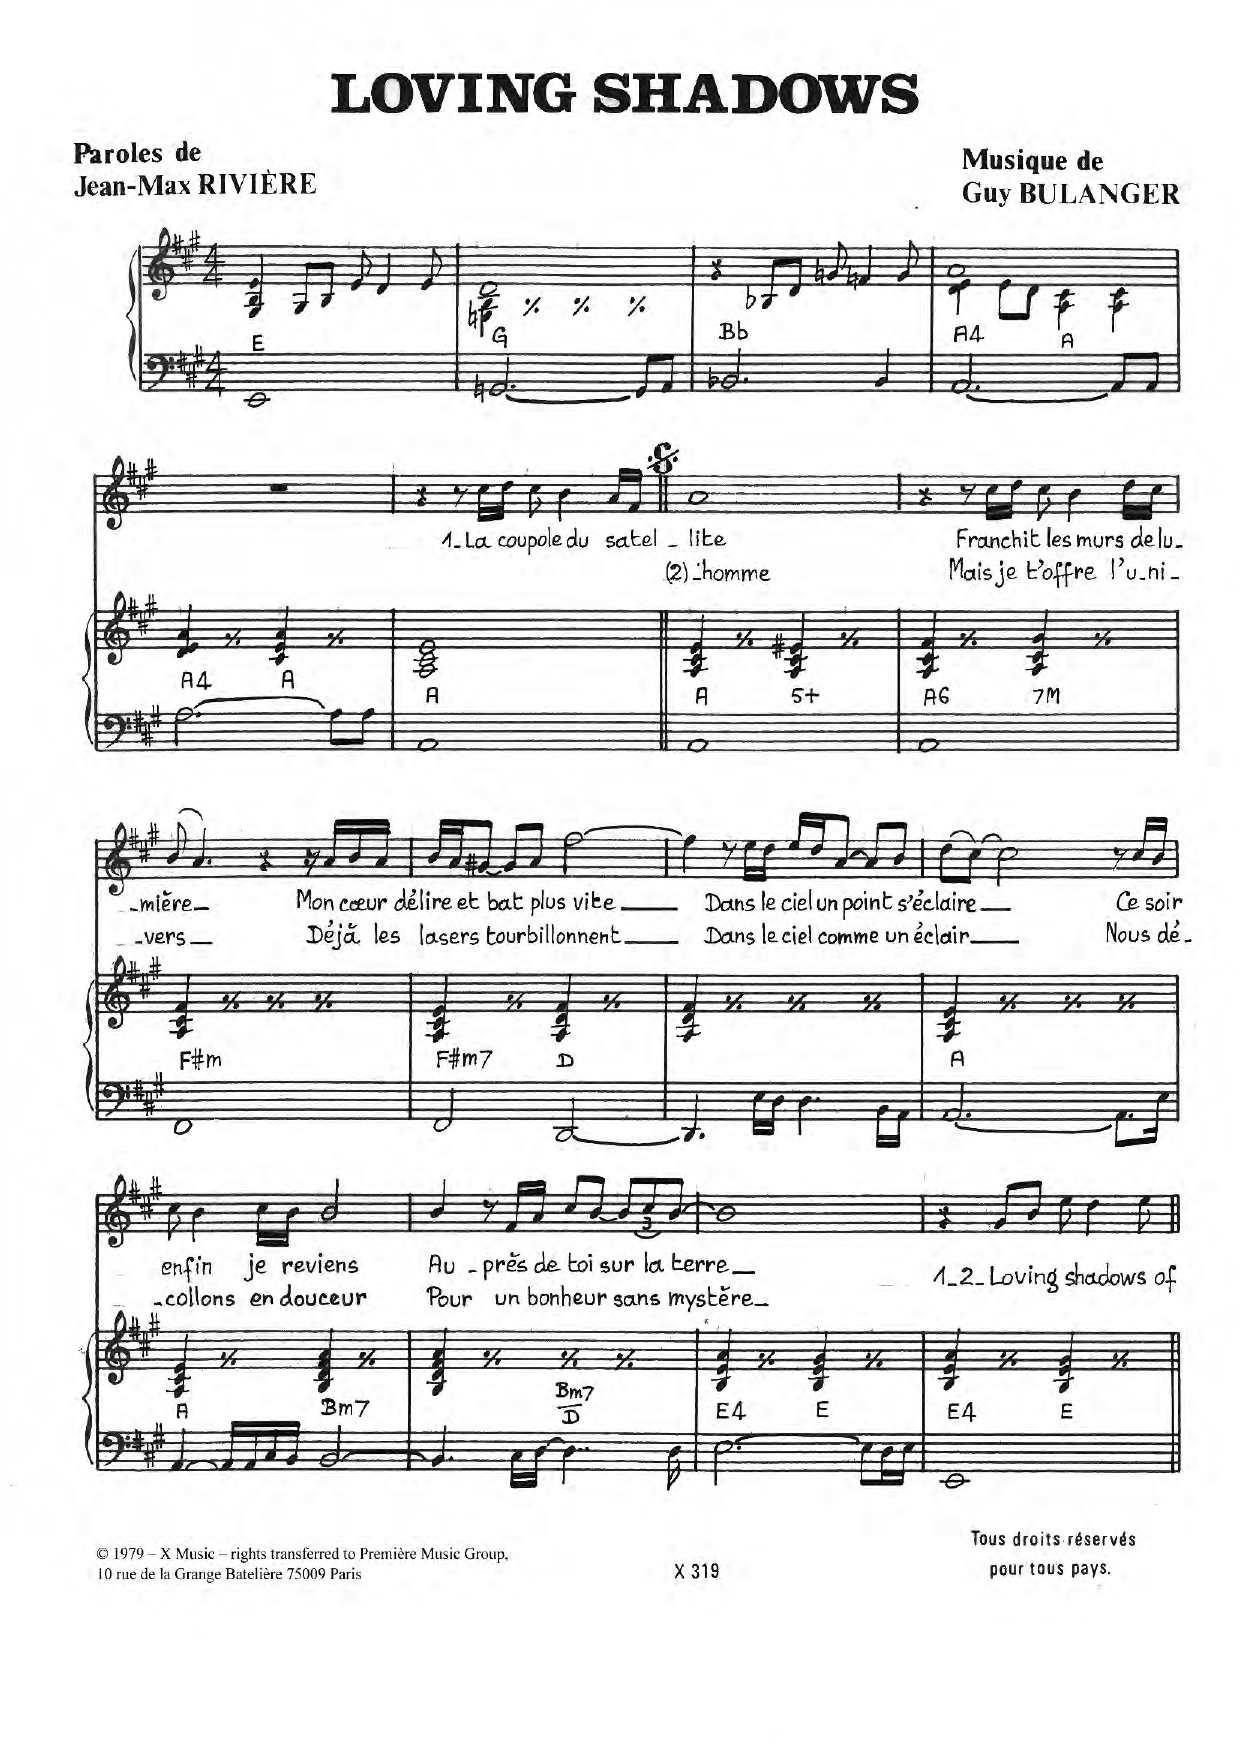 Santa Monica Loving Shadows Sheet Music Notes & Chords for Piano & Vocal - Download or Print PDF